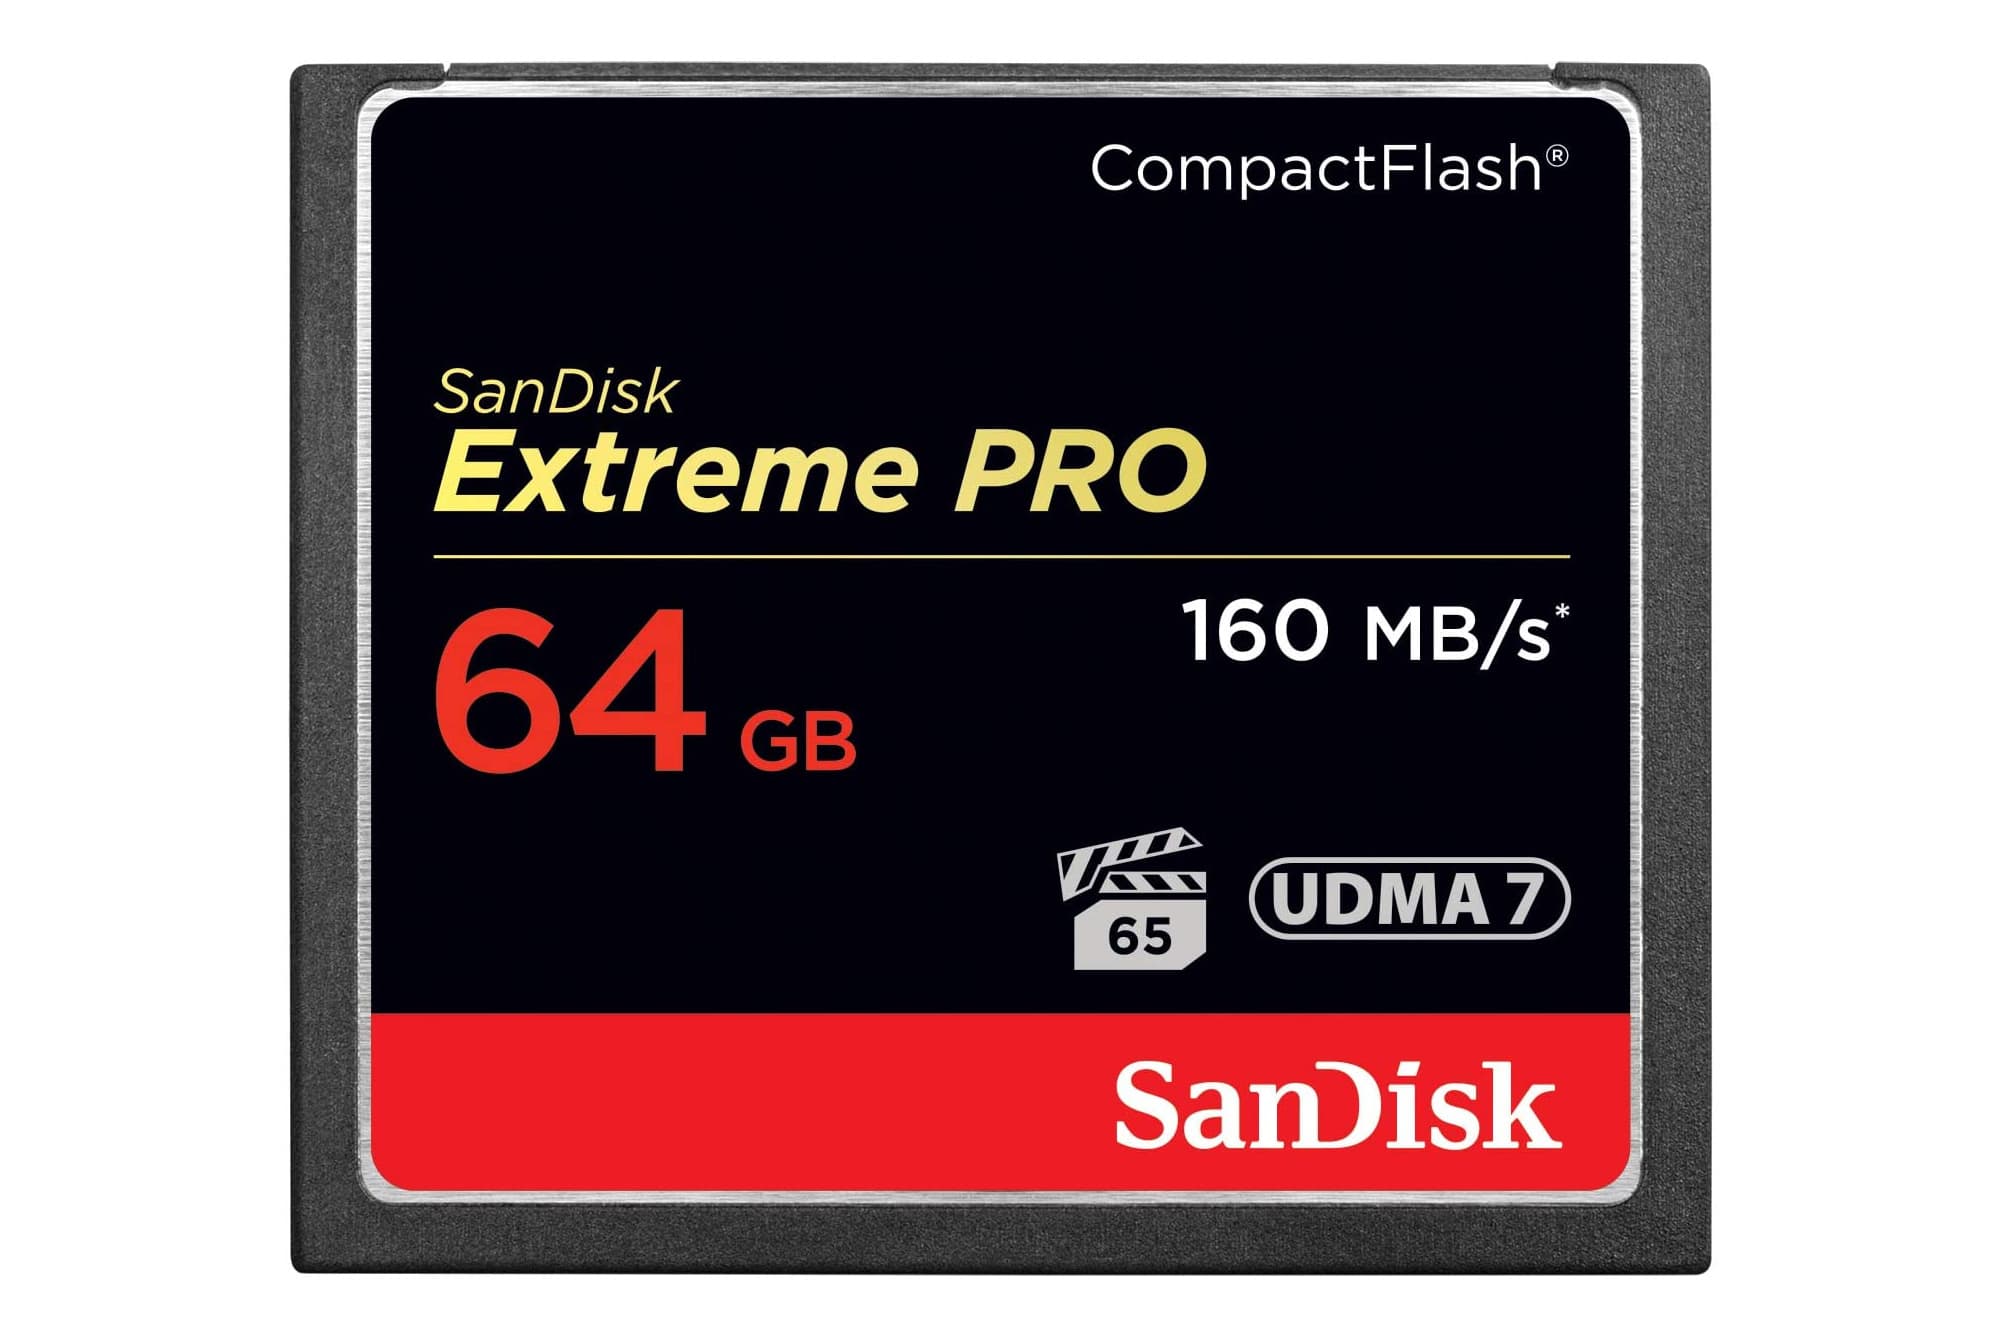 Sandisk Extreme Pro CompactFlash Card